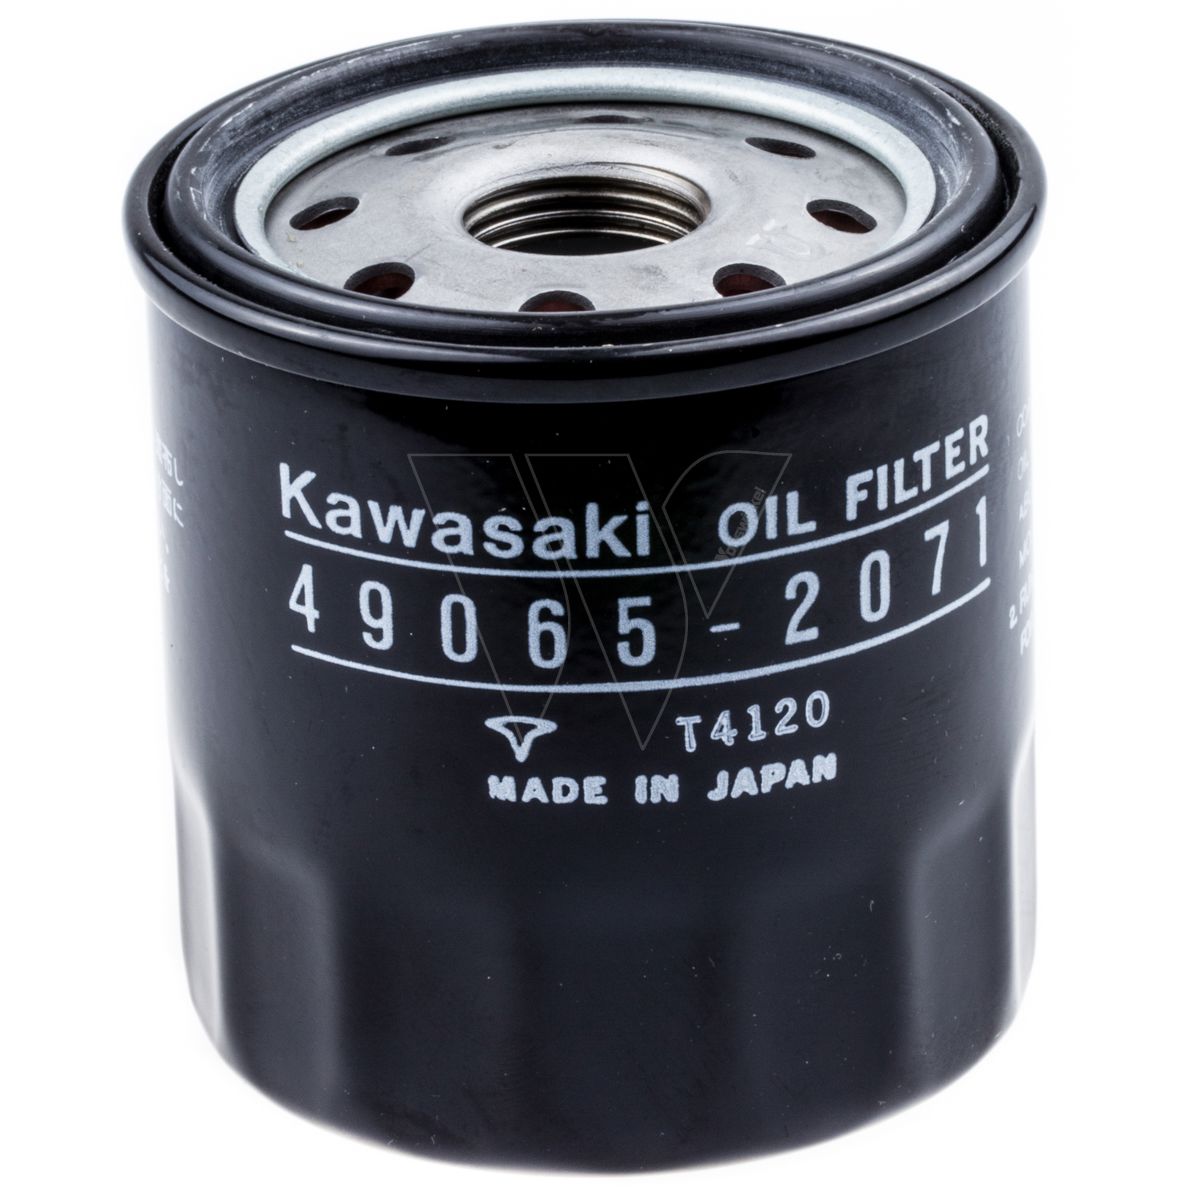 Ölfilter für Kawasiki Motor 49065-7007, 27,85 €